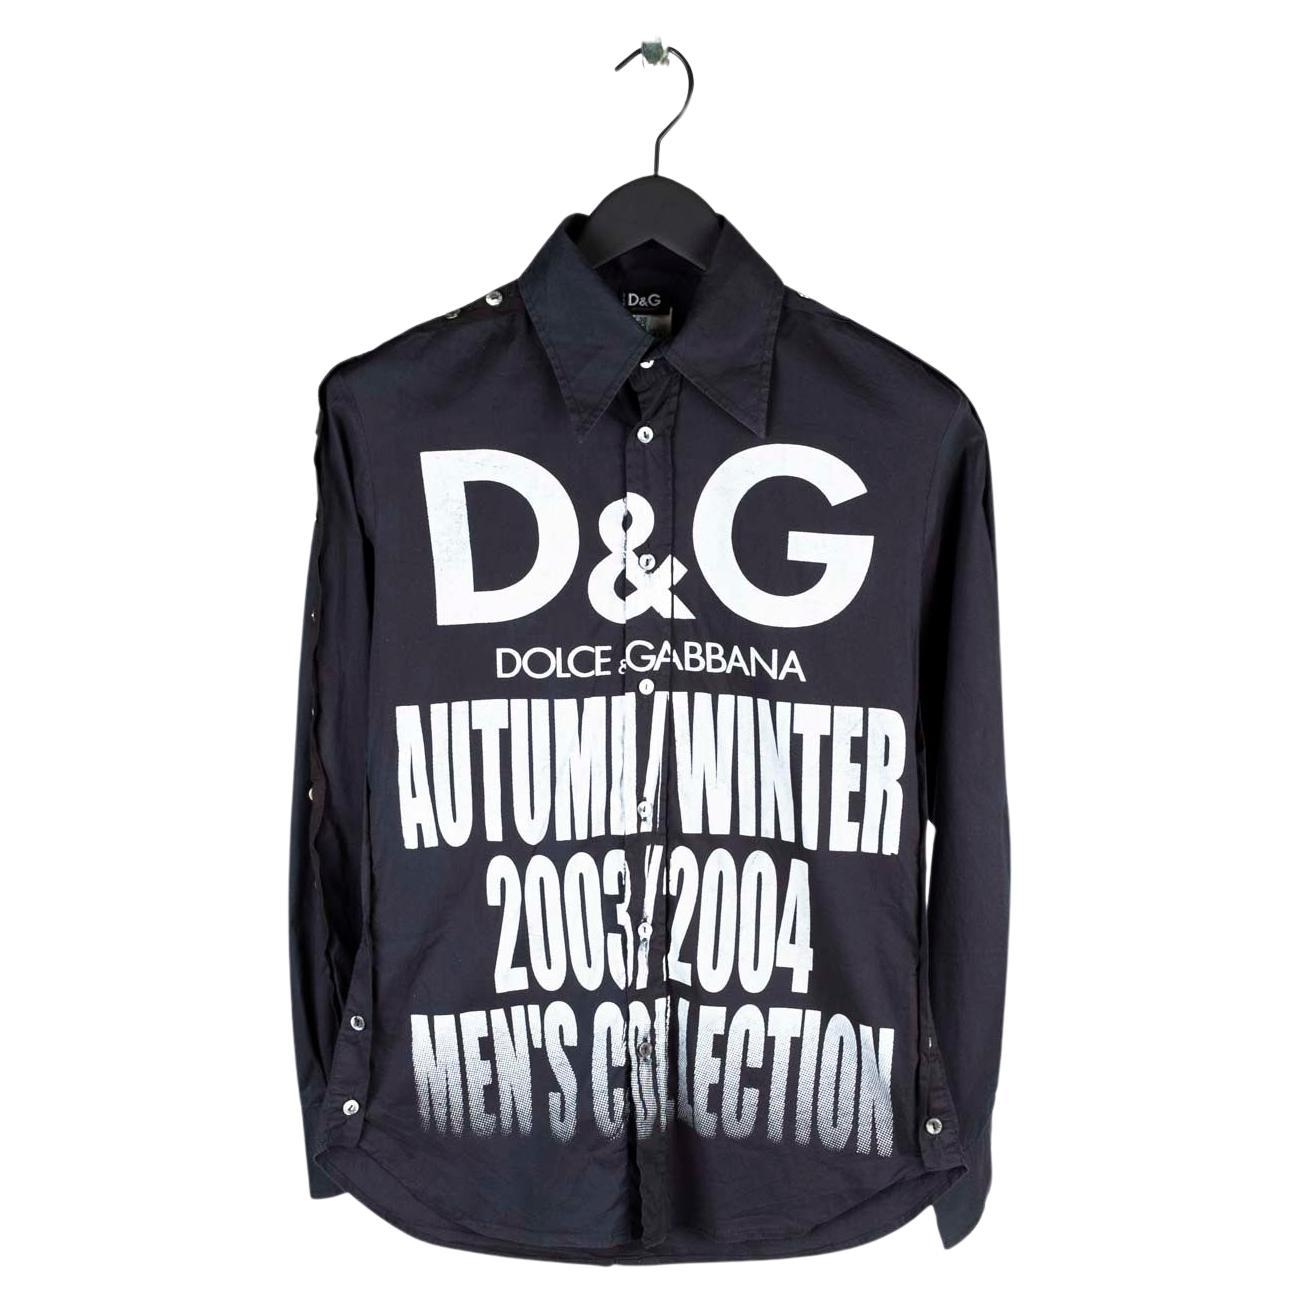 Dolce&Gabbana D&G Men Shirt Runway Vintage Size 30/44 (S/M) For Sale